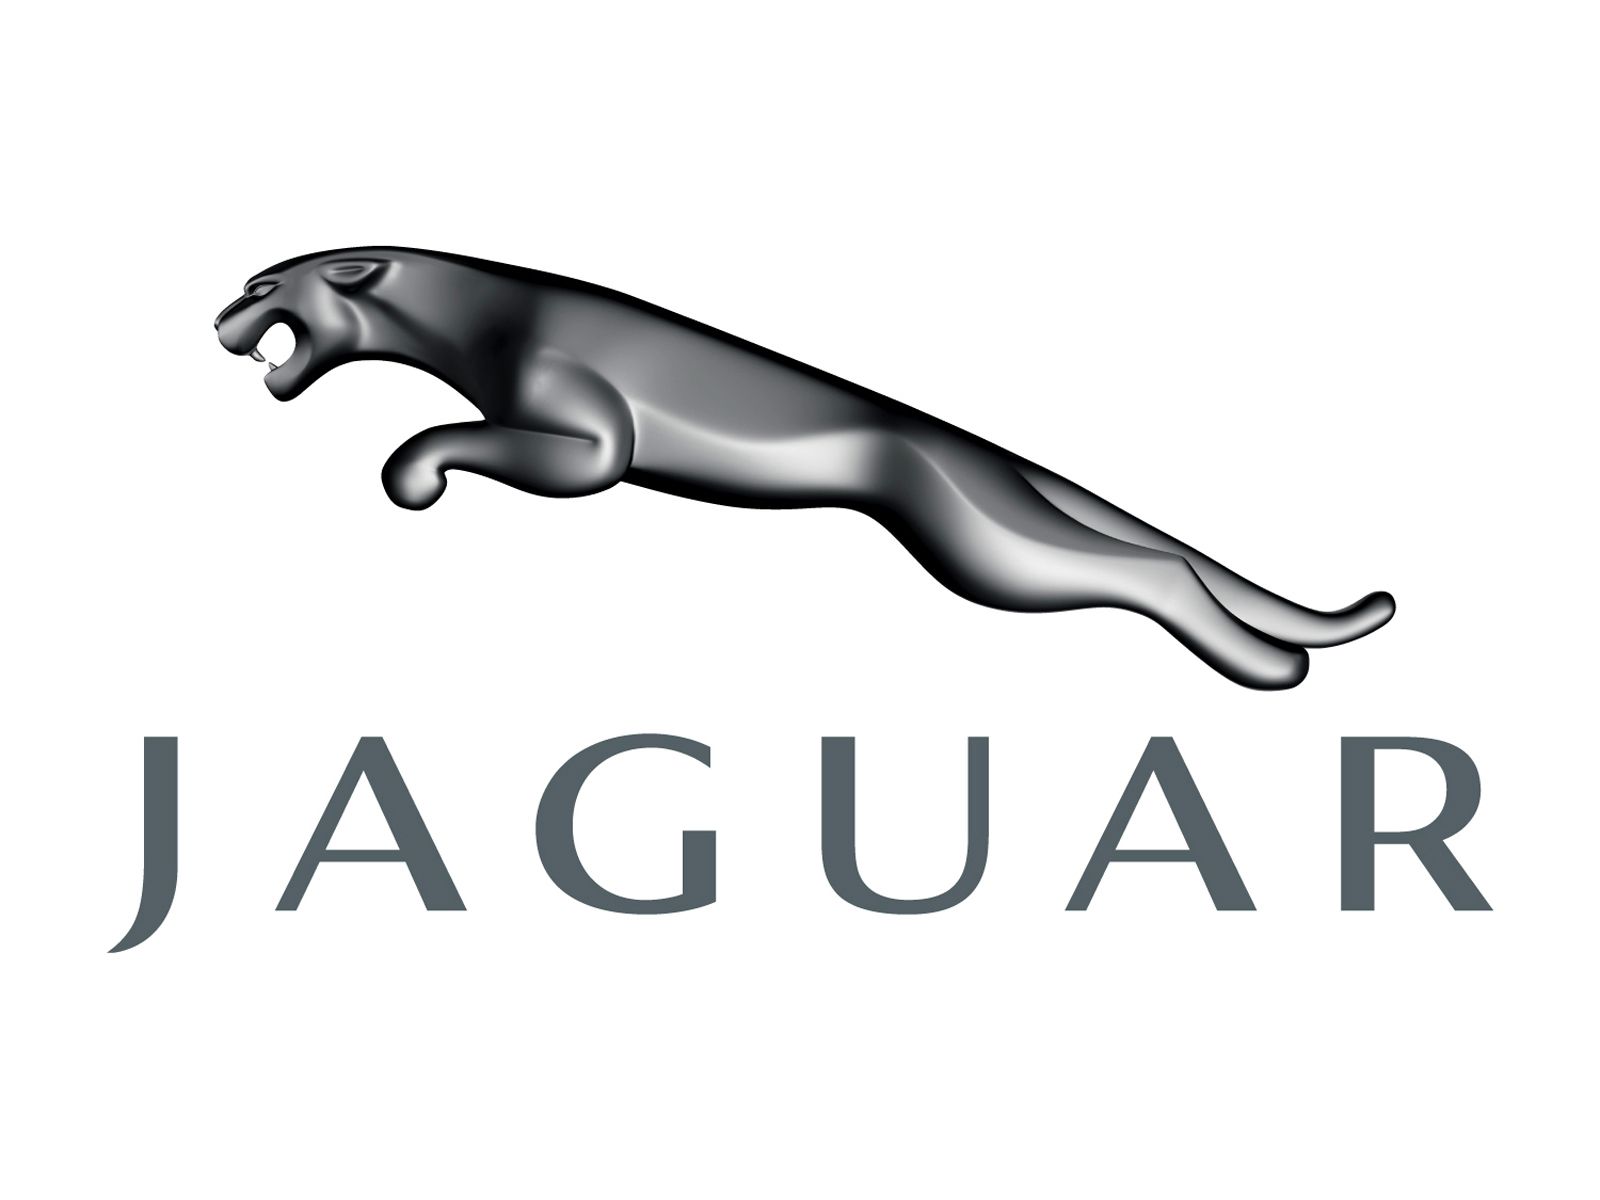 Jaguar Logo, Jaguar Car Symbol Meaning and History. Car brands logos, meaning and symbol